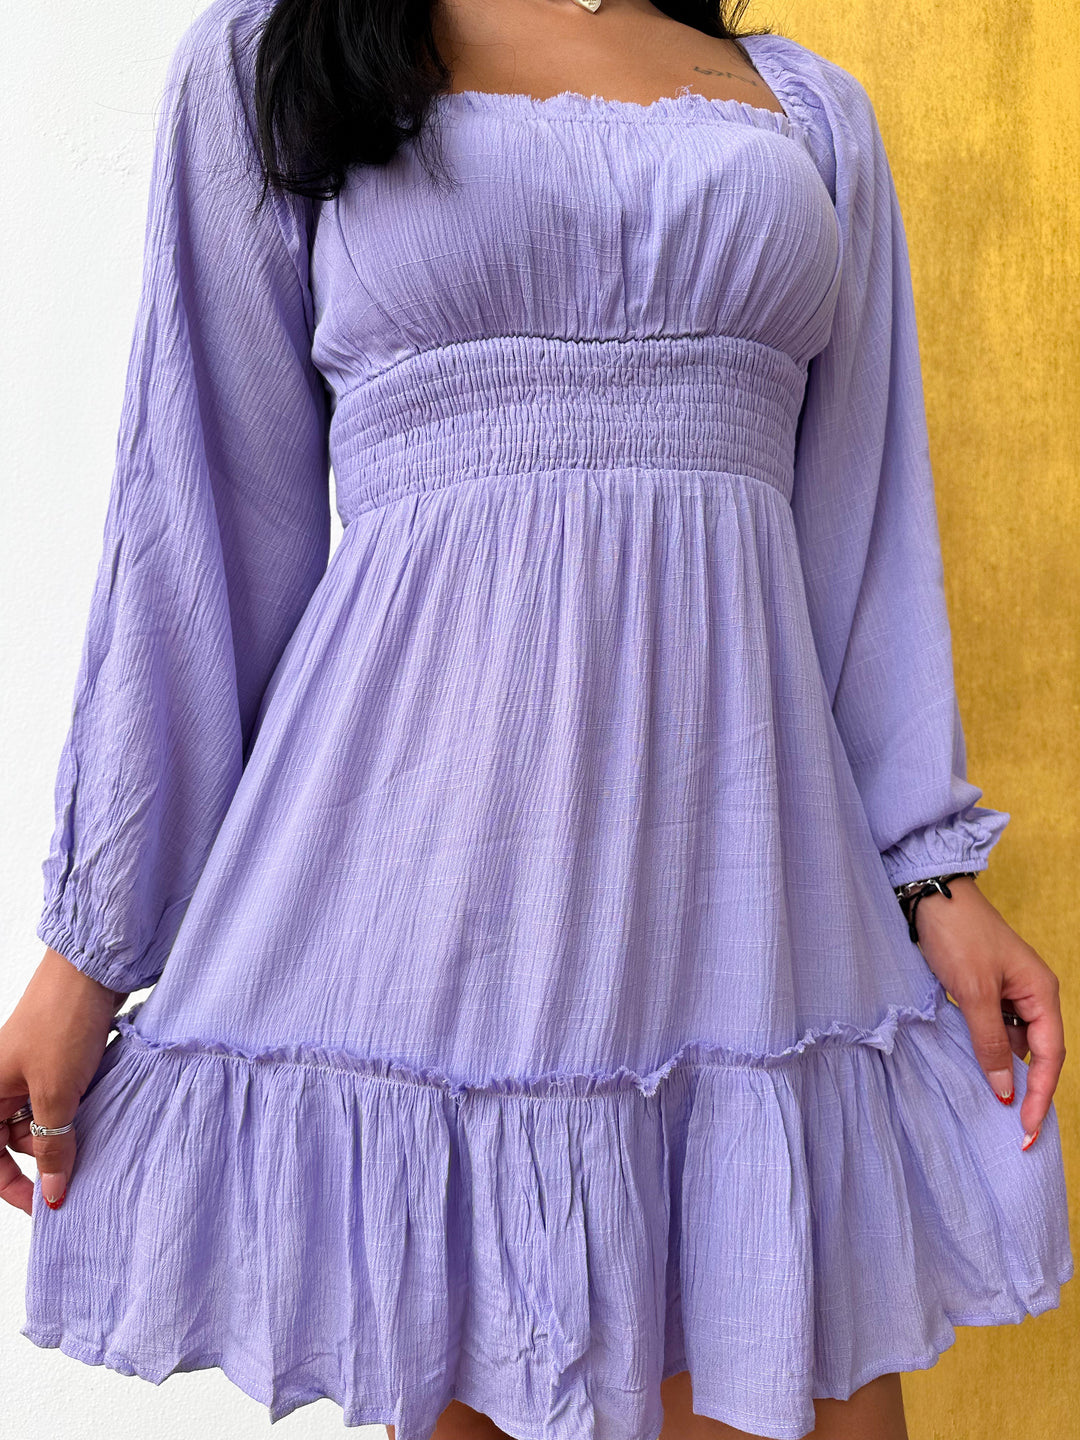 The Adriana Cinched-Waist Mini Dress